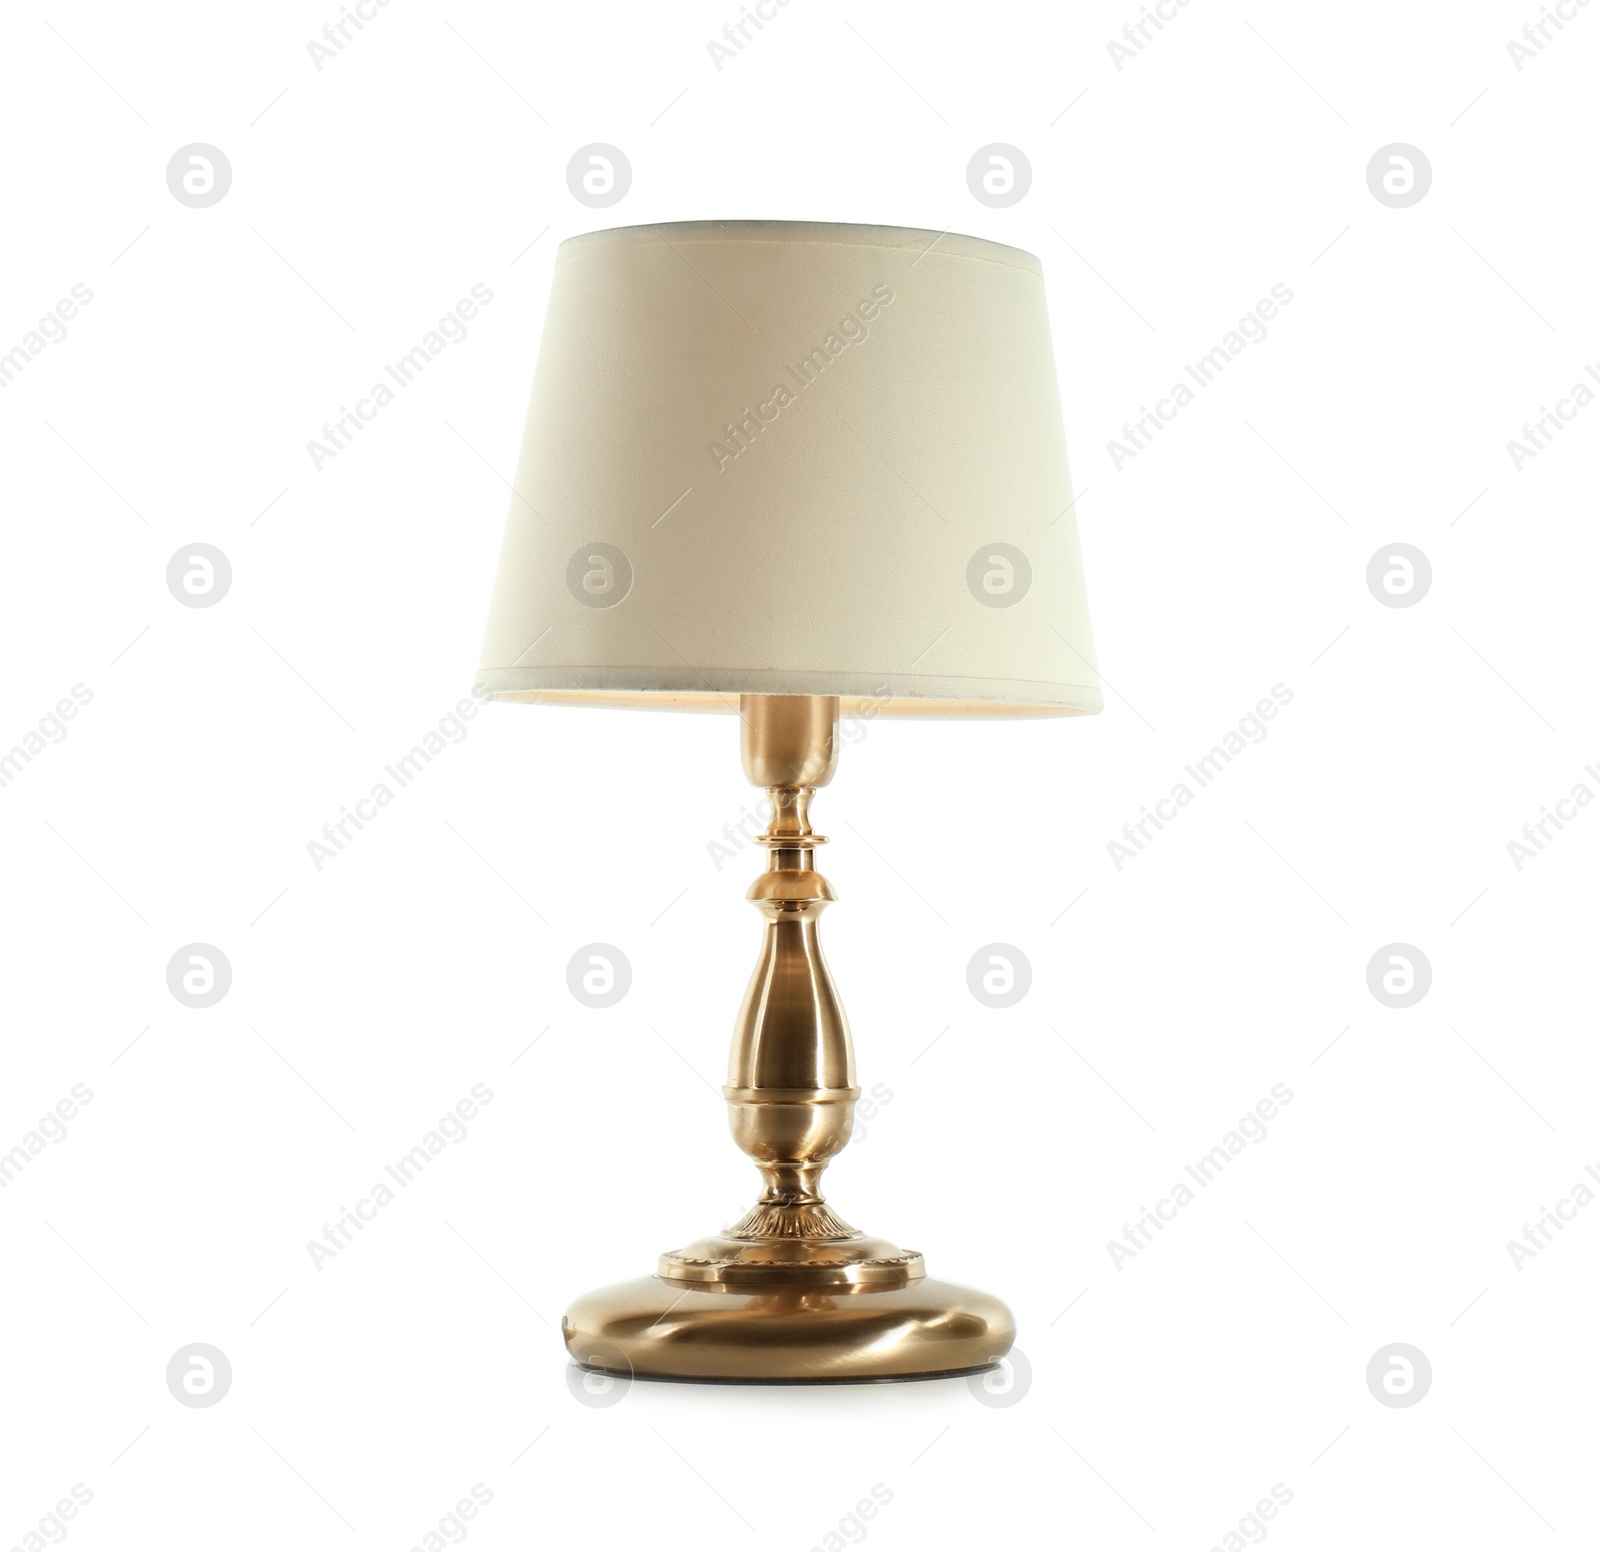 Photo of Stylish table lamp on white background. Idea for interior design